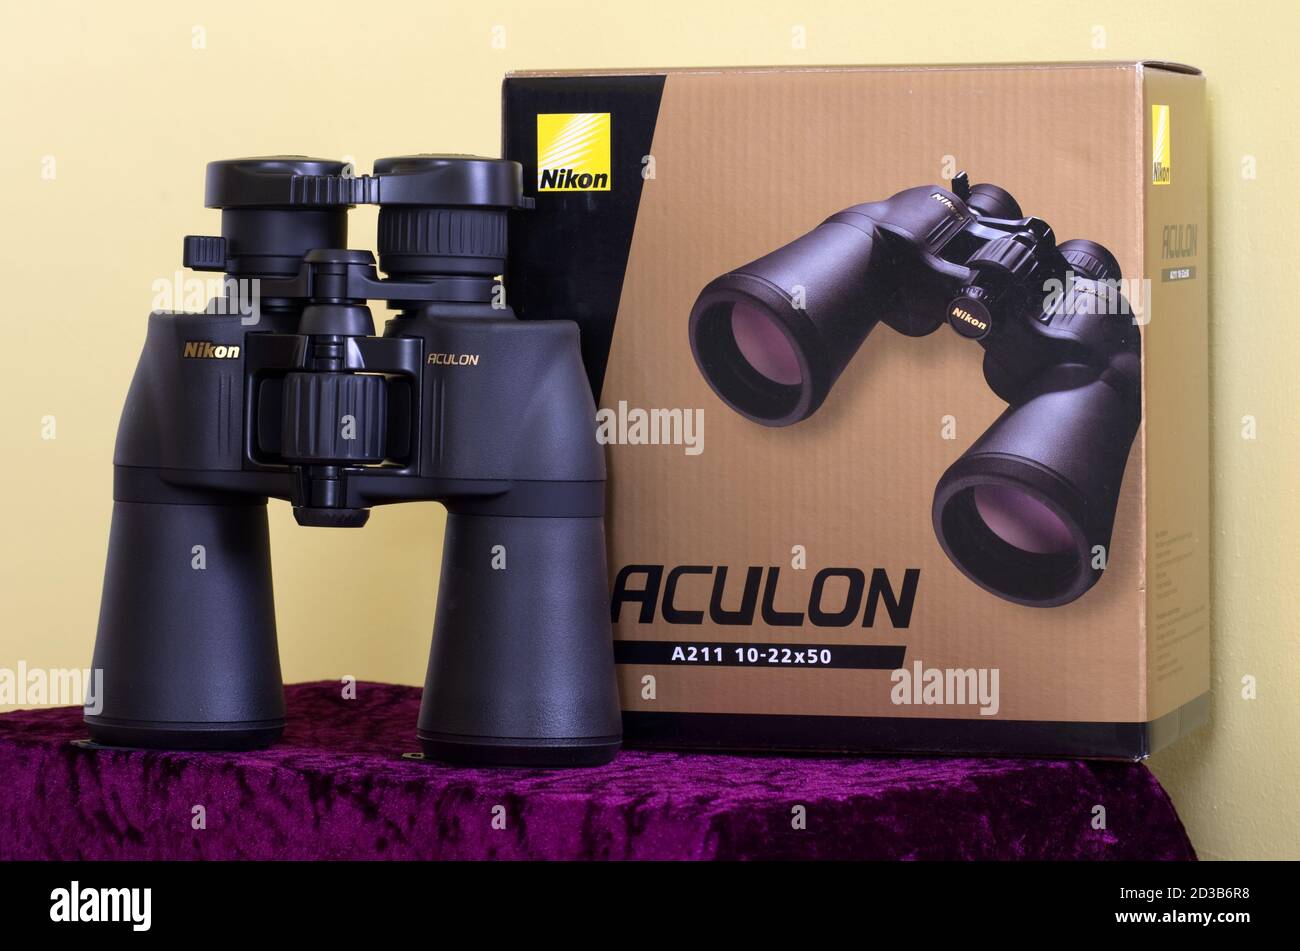 Pair of Nikon Aculon A211 Binoculars or Field Glasses, UK Stock Photo -  Alamy